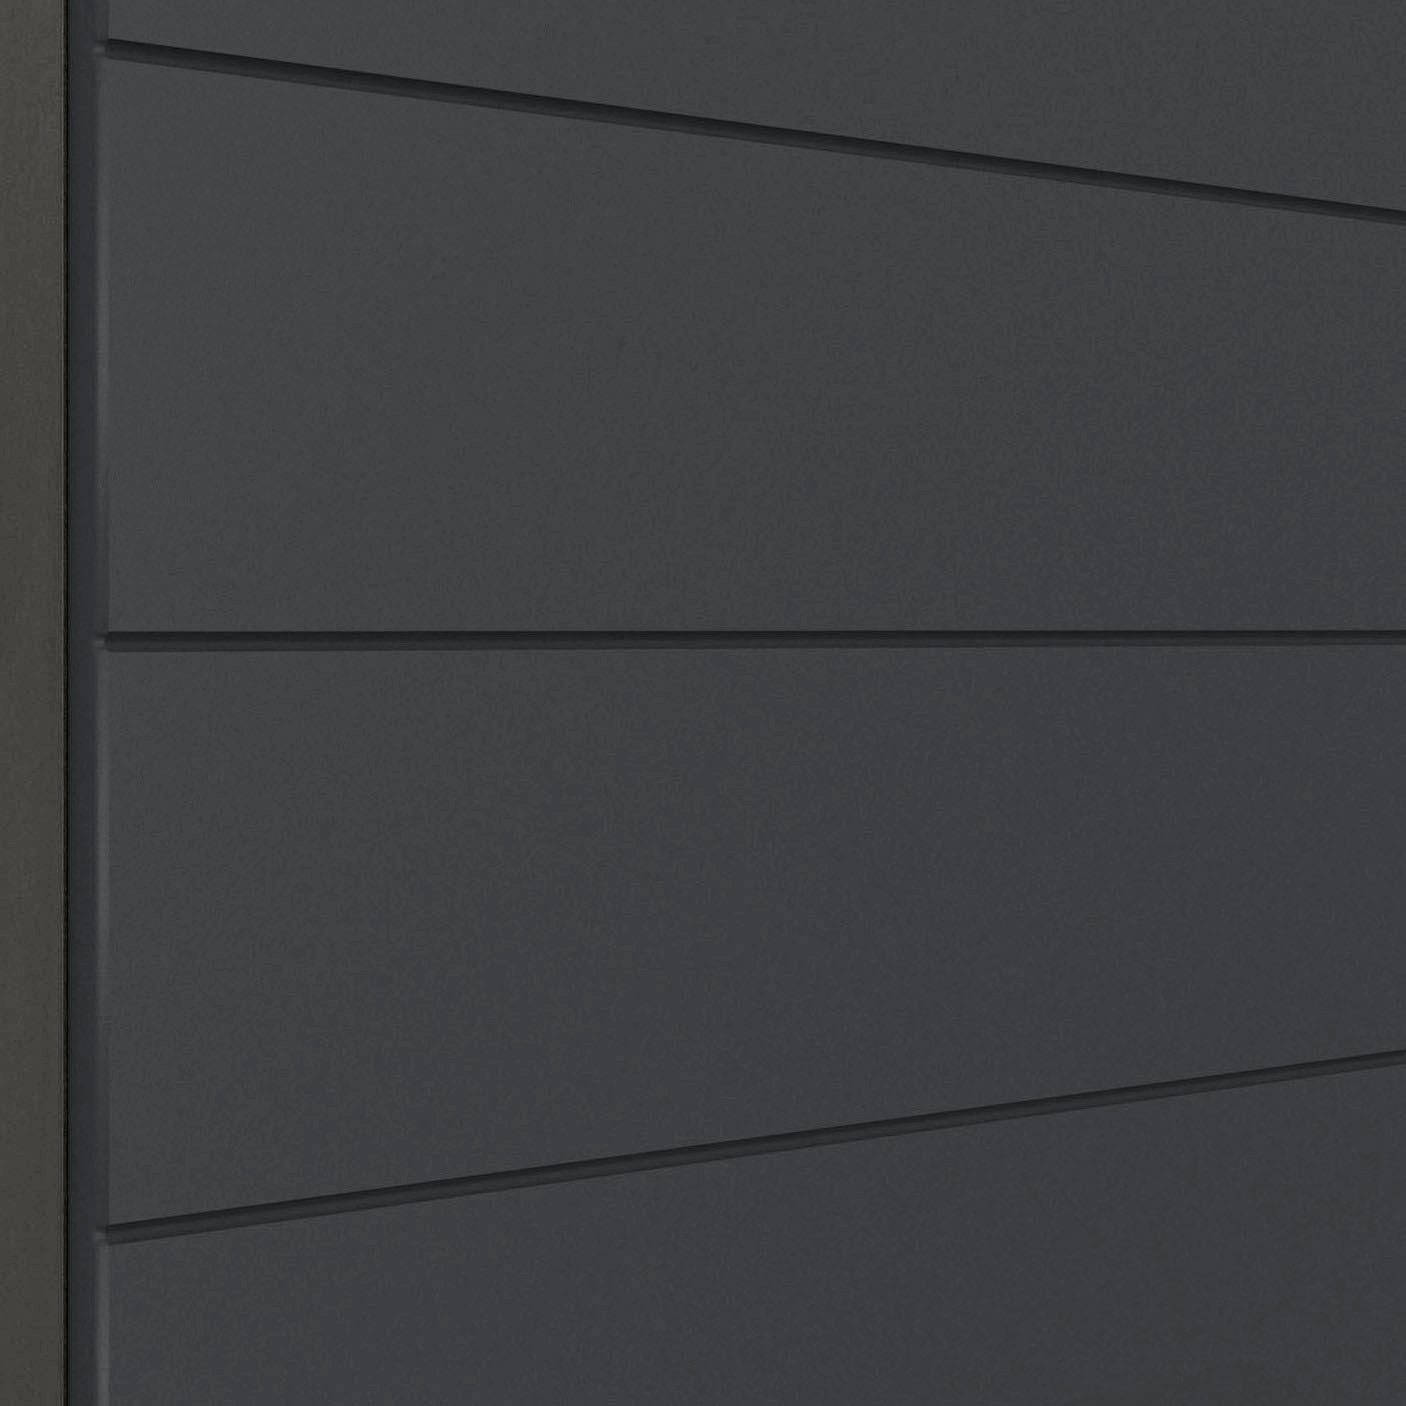 HELD | Lisene mit waagerechter breit, cm 60 Matt/grafit Luhe hochwertige Kühlumbauschrank MDF-Fronten graphit MÖBEL grau